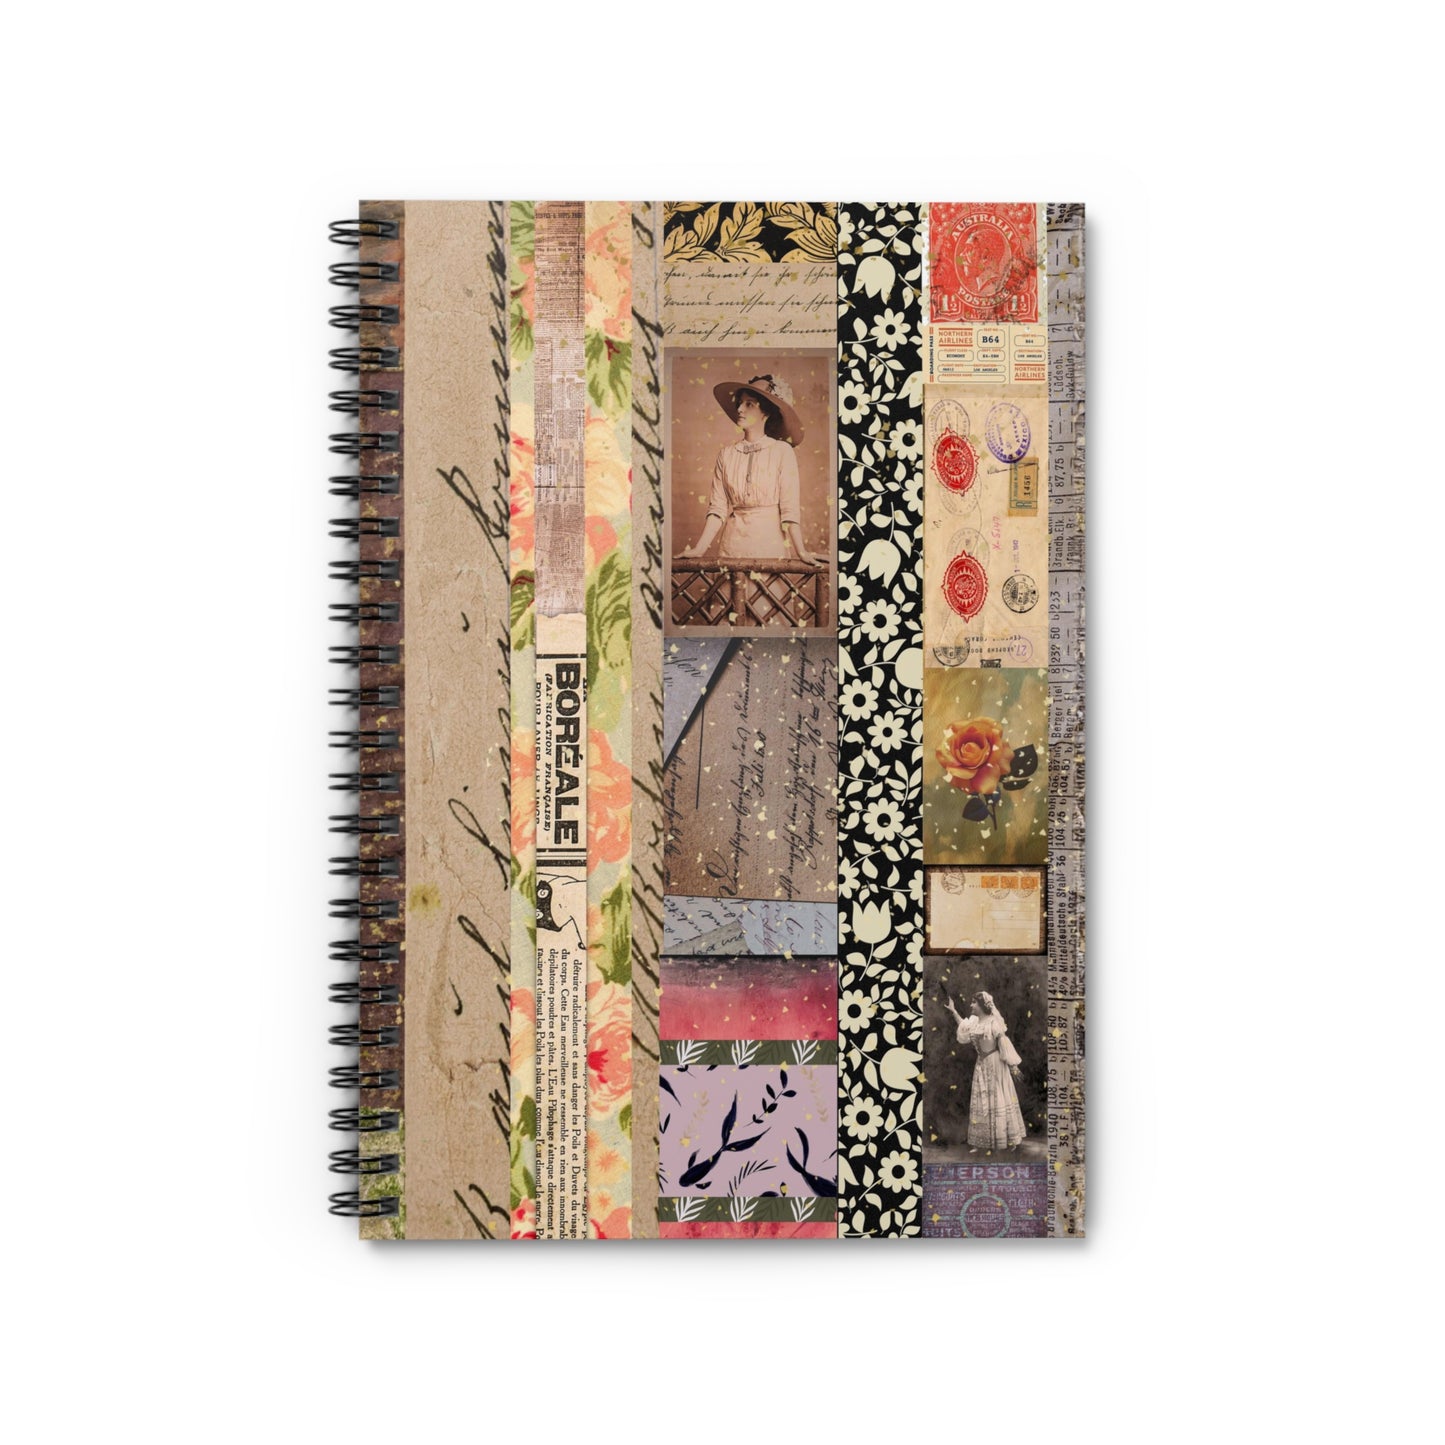 Ephemera Collage Vintage Spiral Notebook Ruled Line Journal